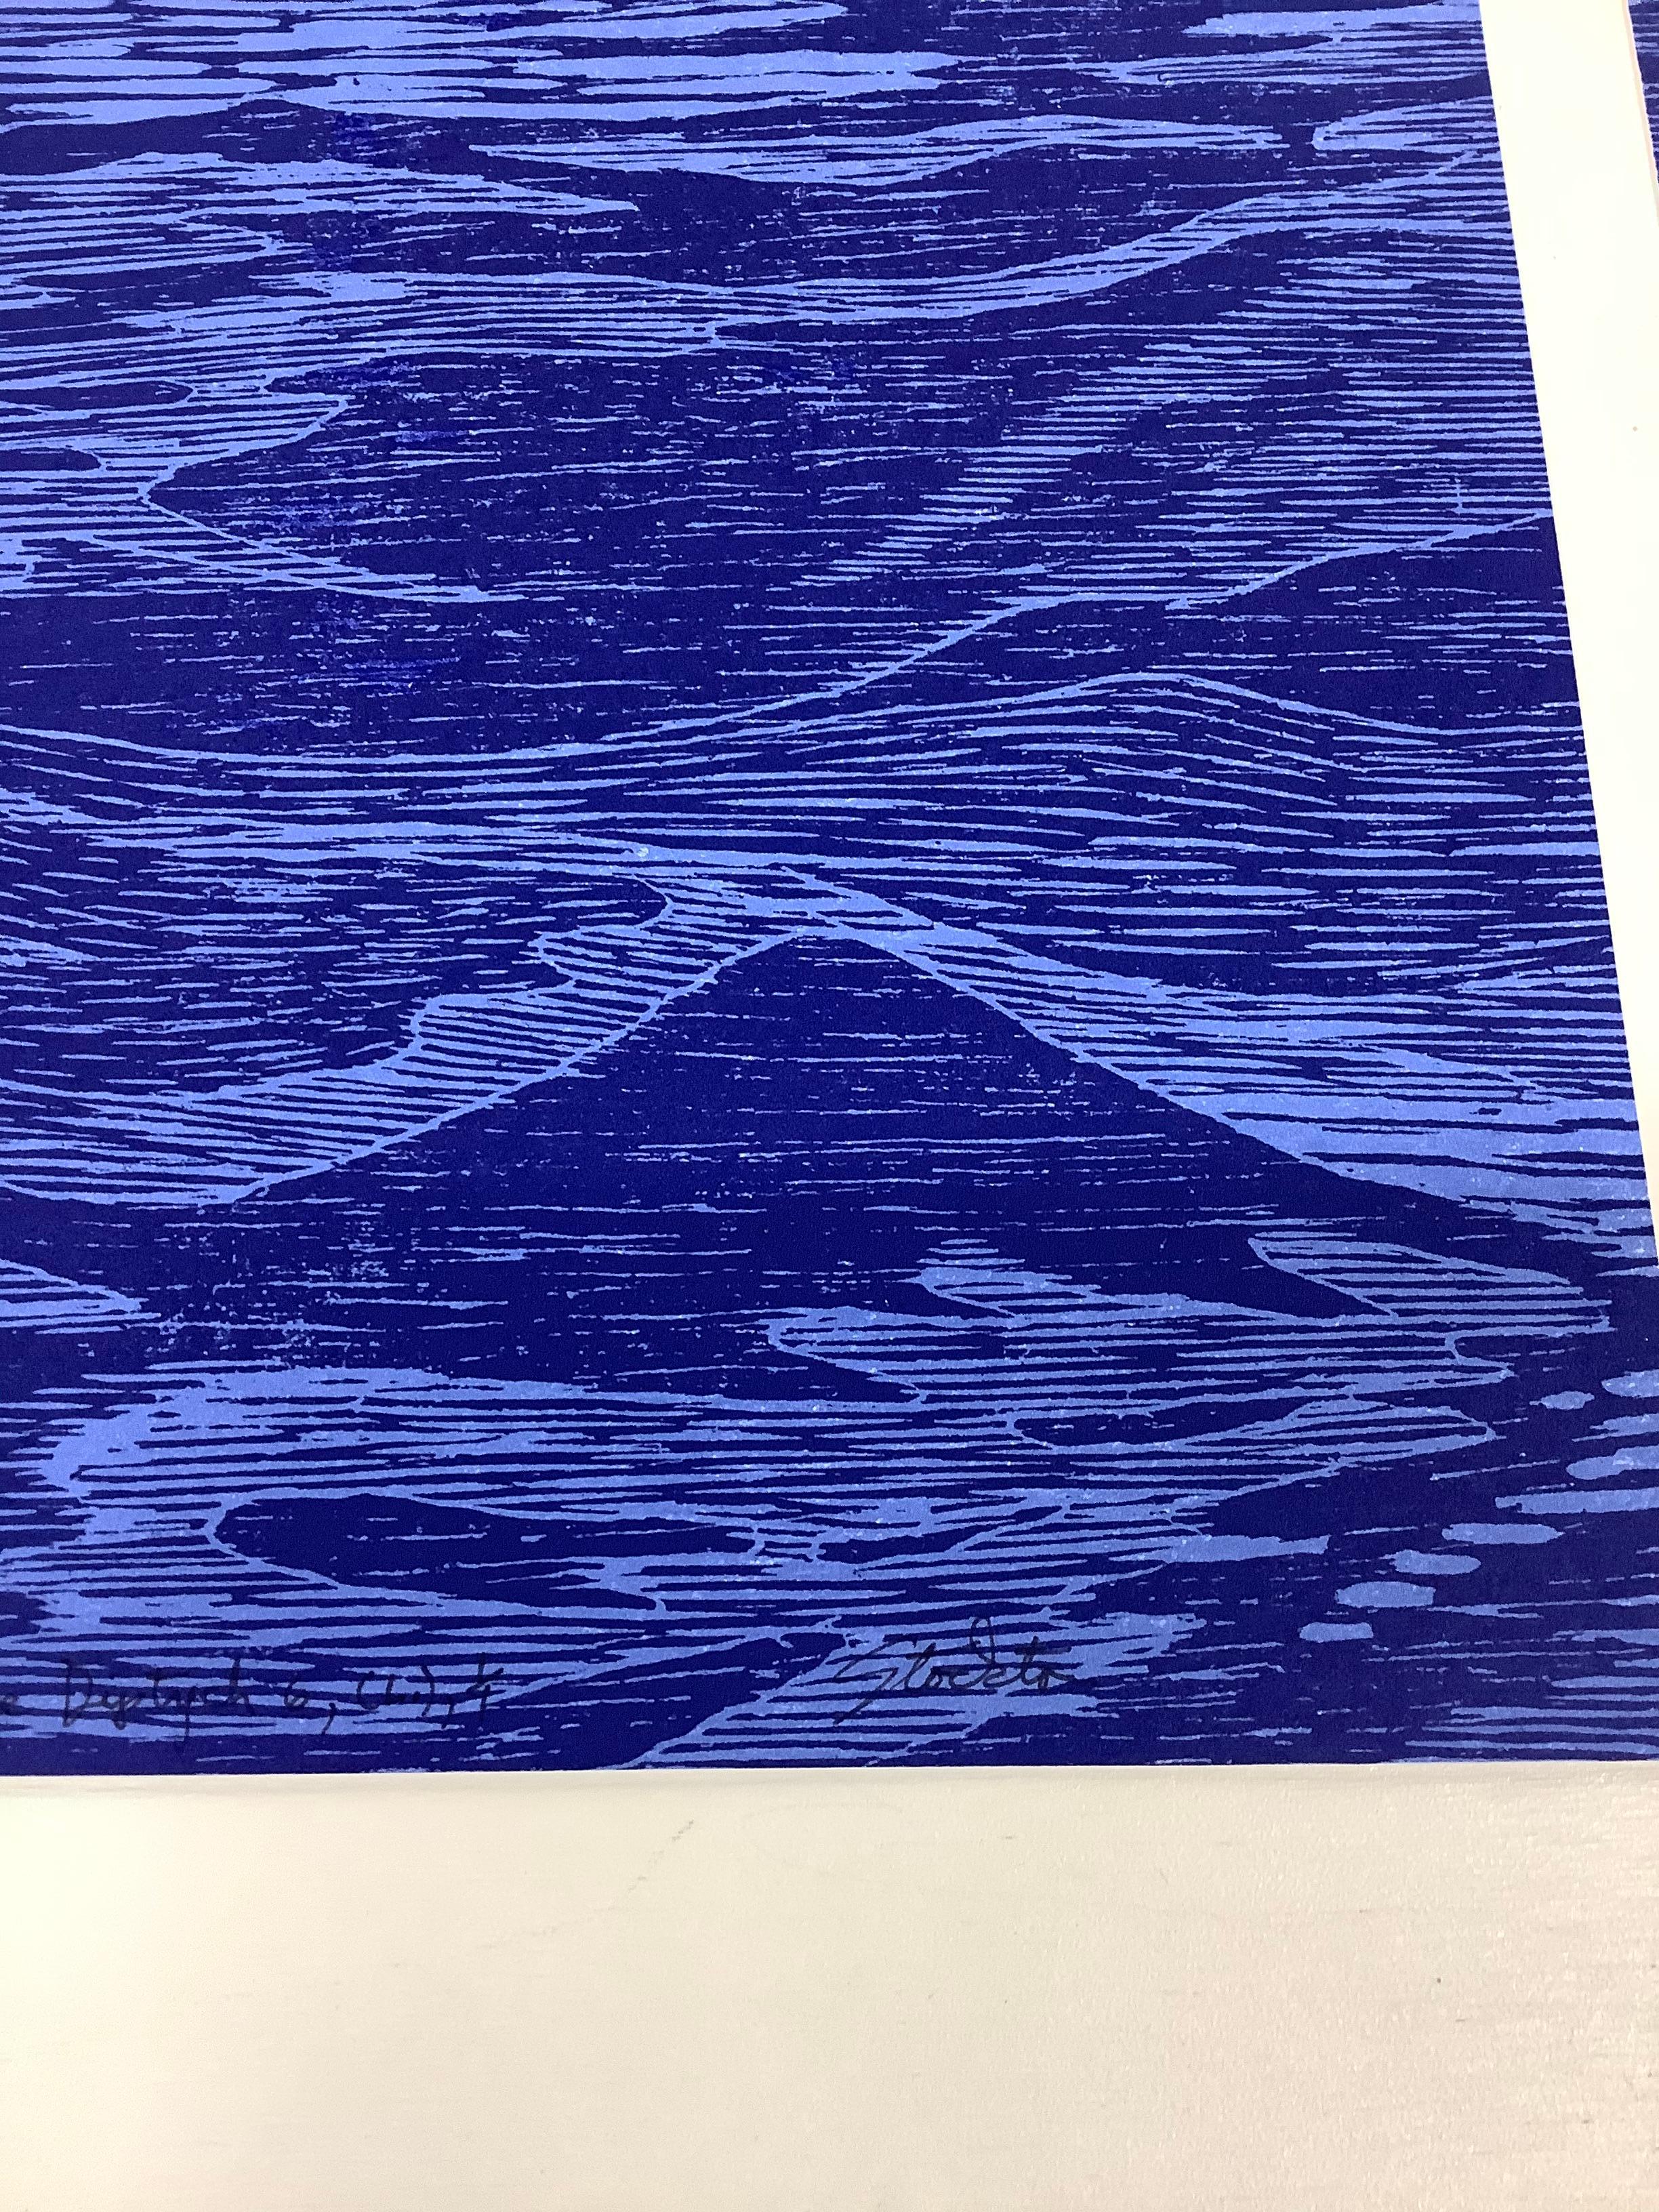 Seascape Diptych Six, Cobalt Blue Horizontal Seascape, Waves Woodcut Print   For Sale 10